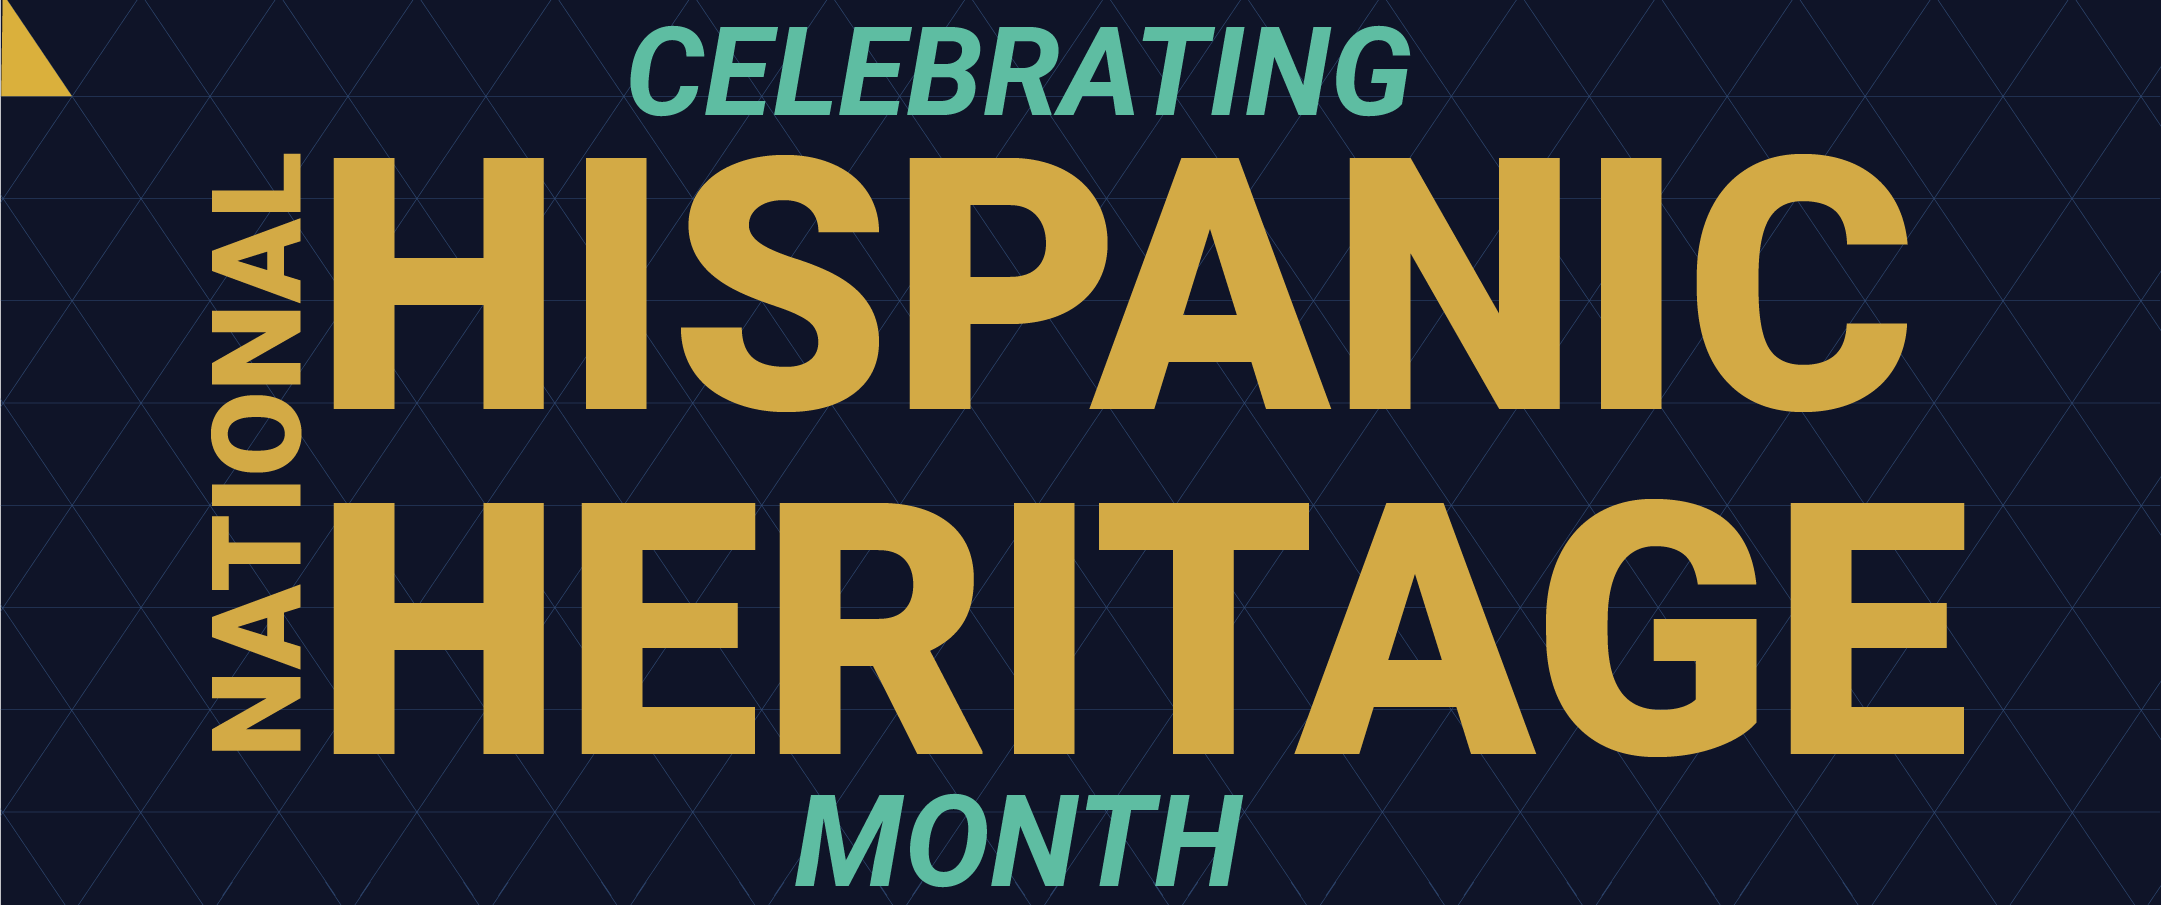 Celebrating Hispanic Heritage Month: Part 2